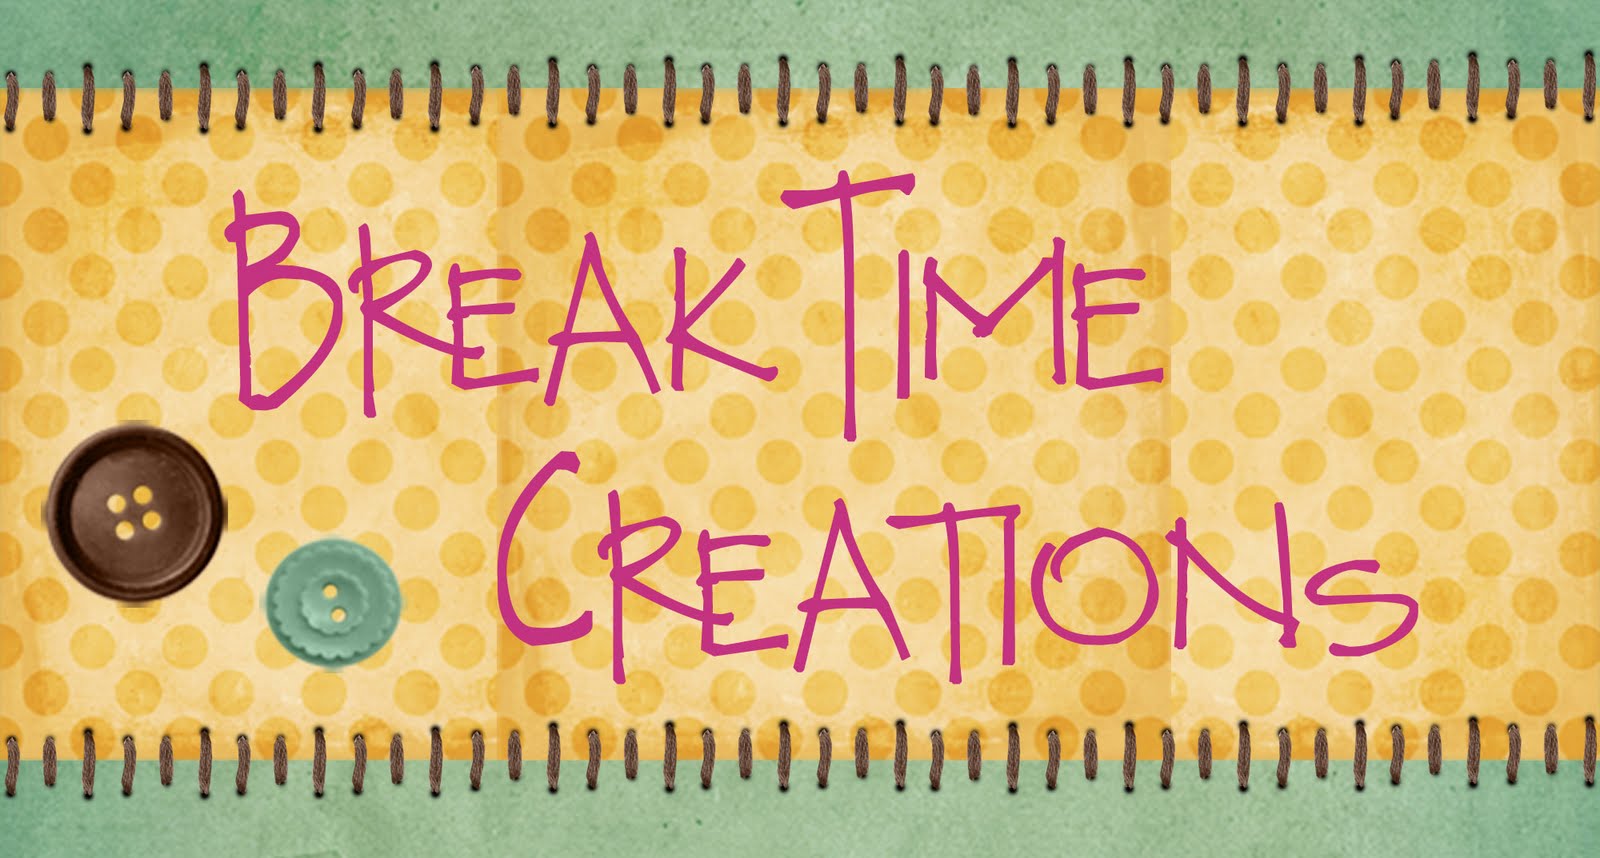 Break Time Creations